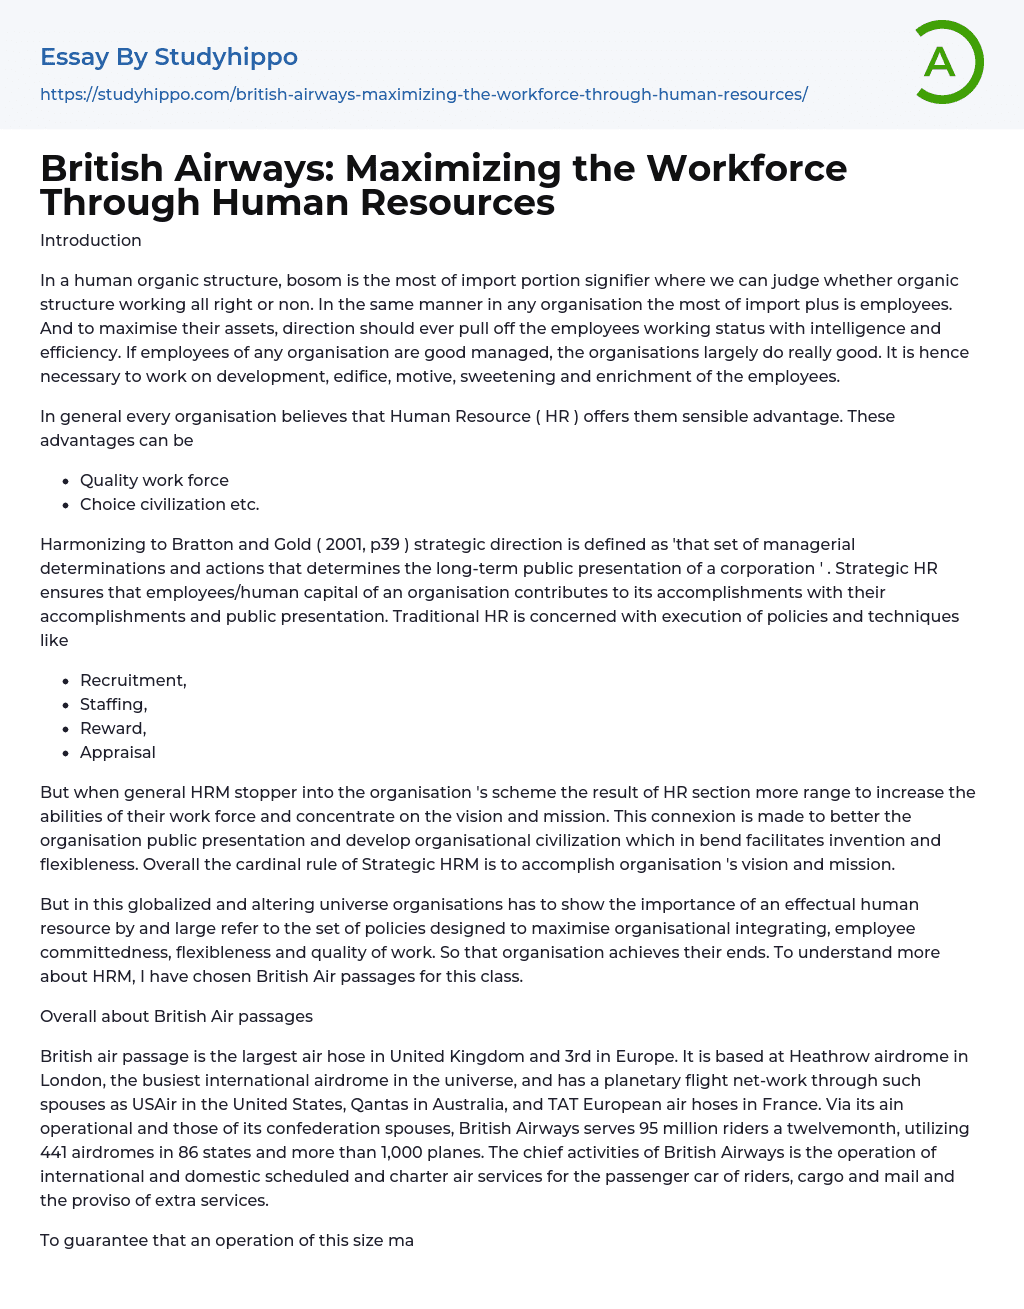 British Airways: Maximizing the Workforce Through Human Resources Essay Example